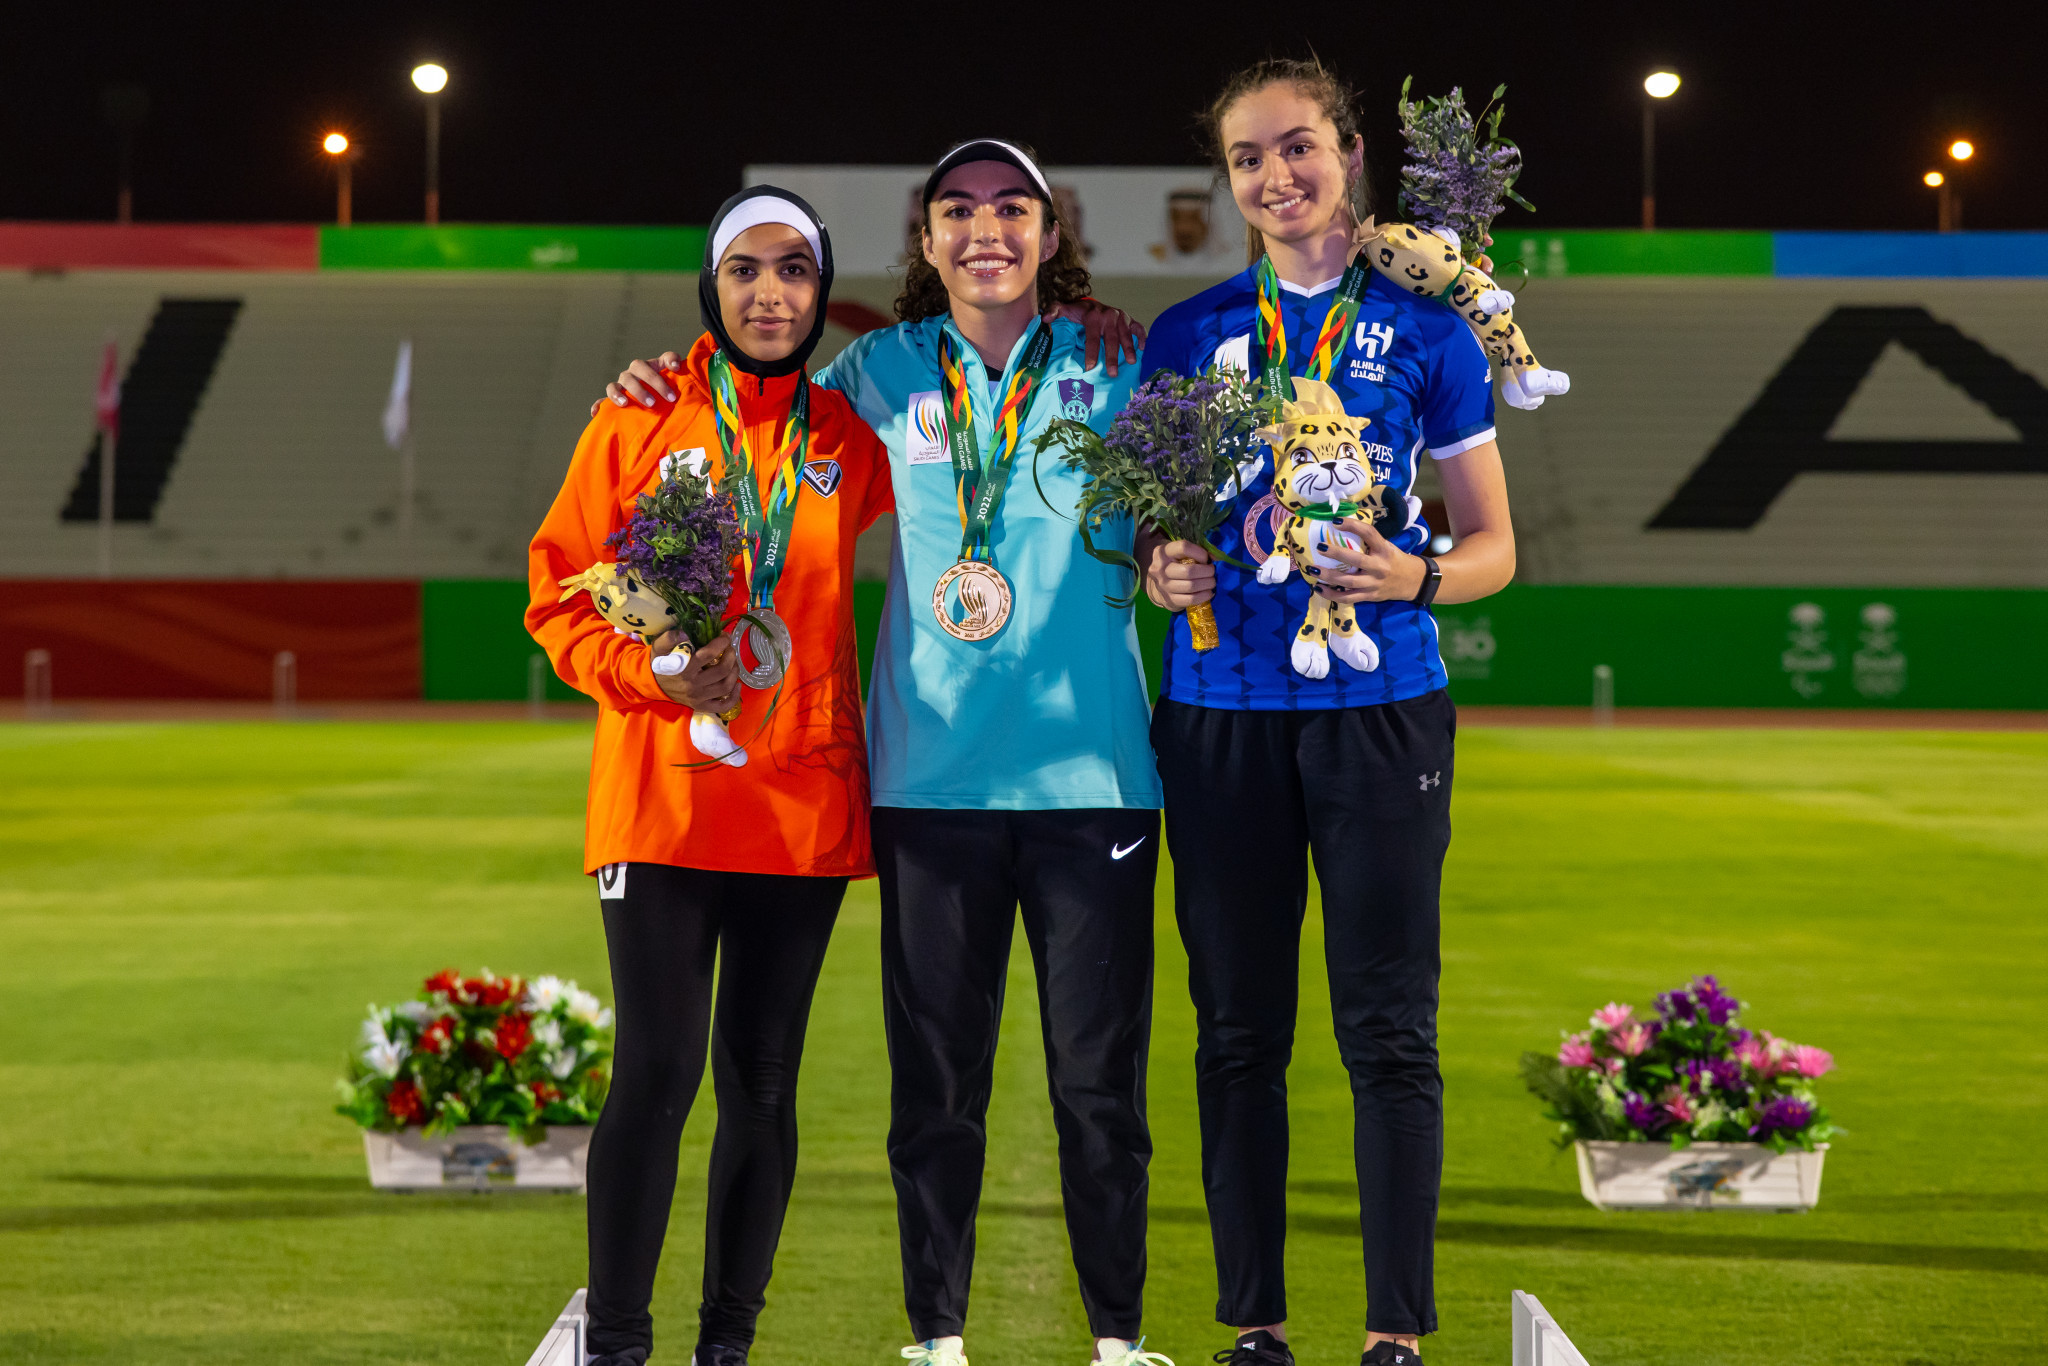 Yassmien Al-Dabbagh, centre, won gold in the women's 100m as Lujain Al-Humaid, left, and Yara Abo Al-Jadaiel took silver and bronze ©Saudi Games